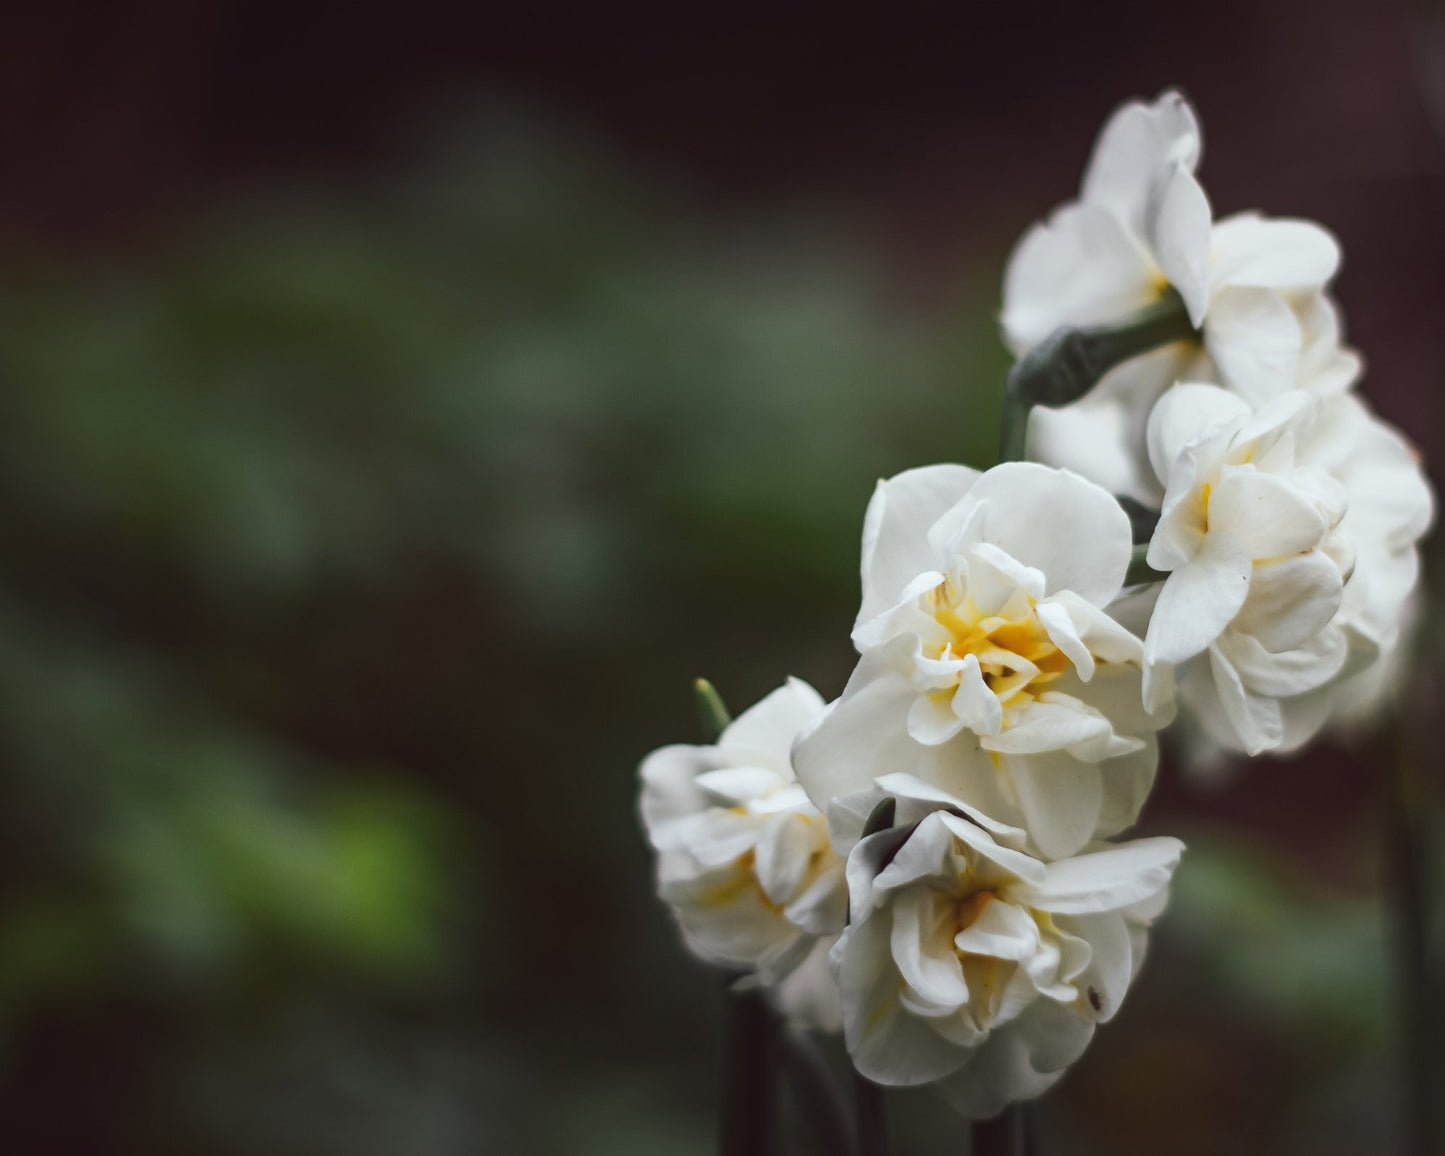 Narcissus Bridal Crown - pak van 10 bloembollen - Tuinkabouter Chrisje